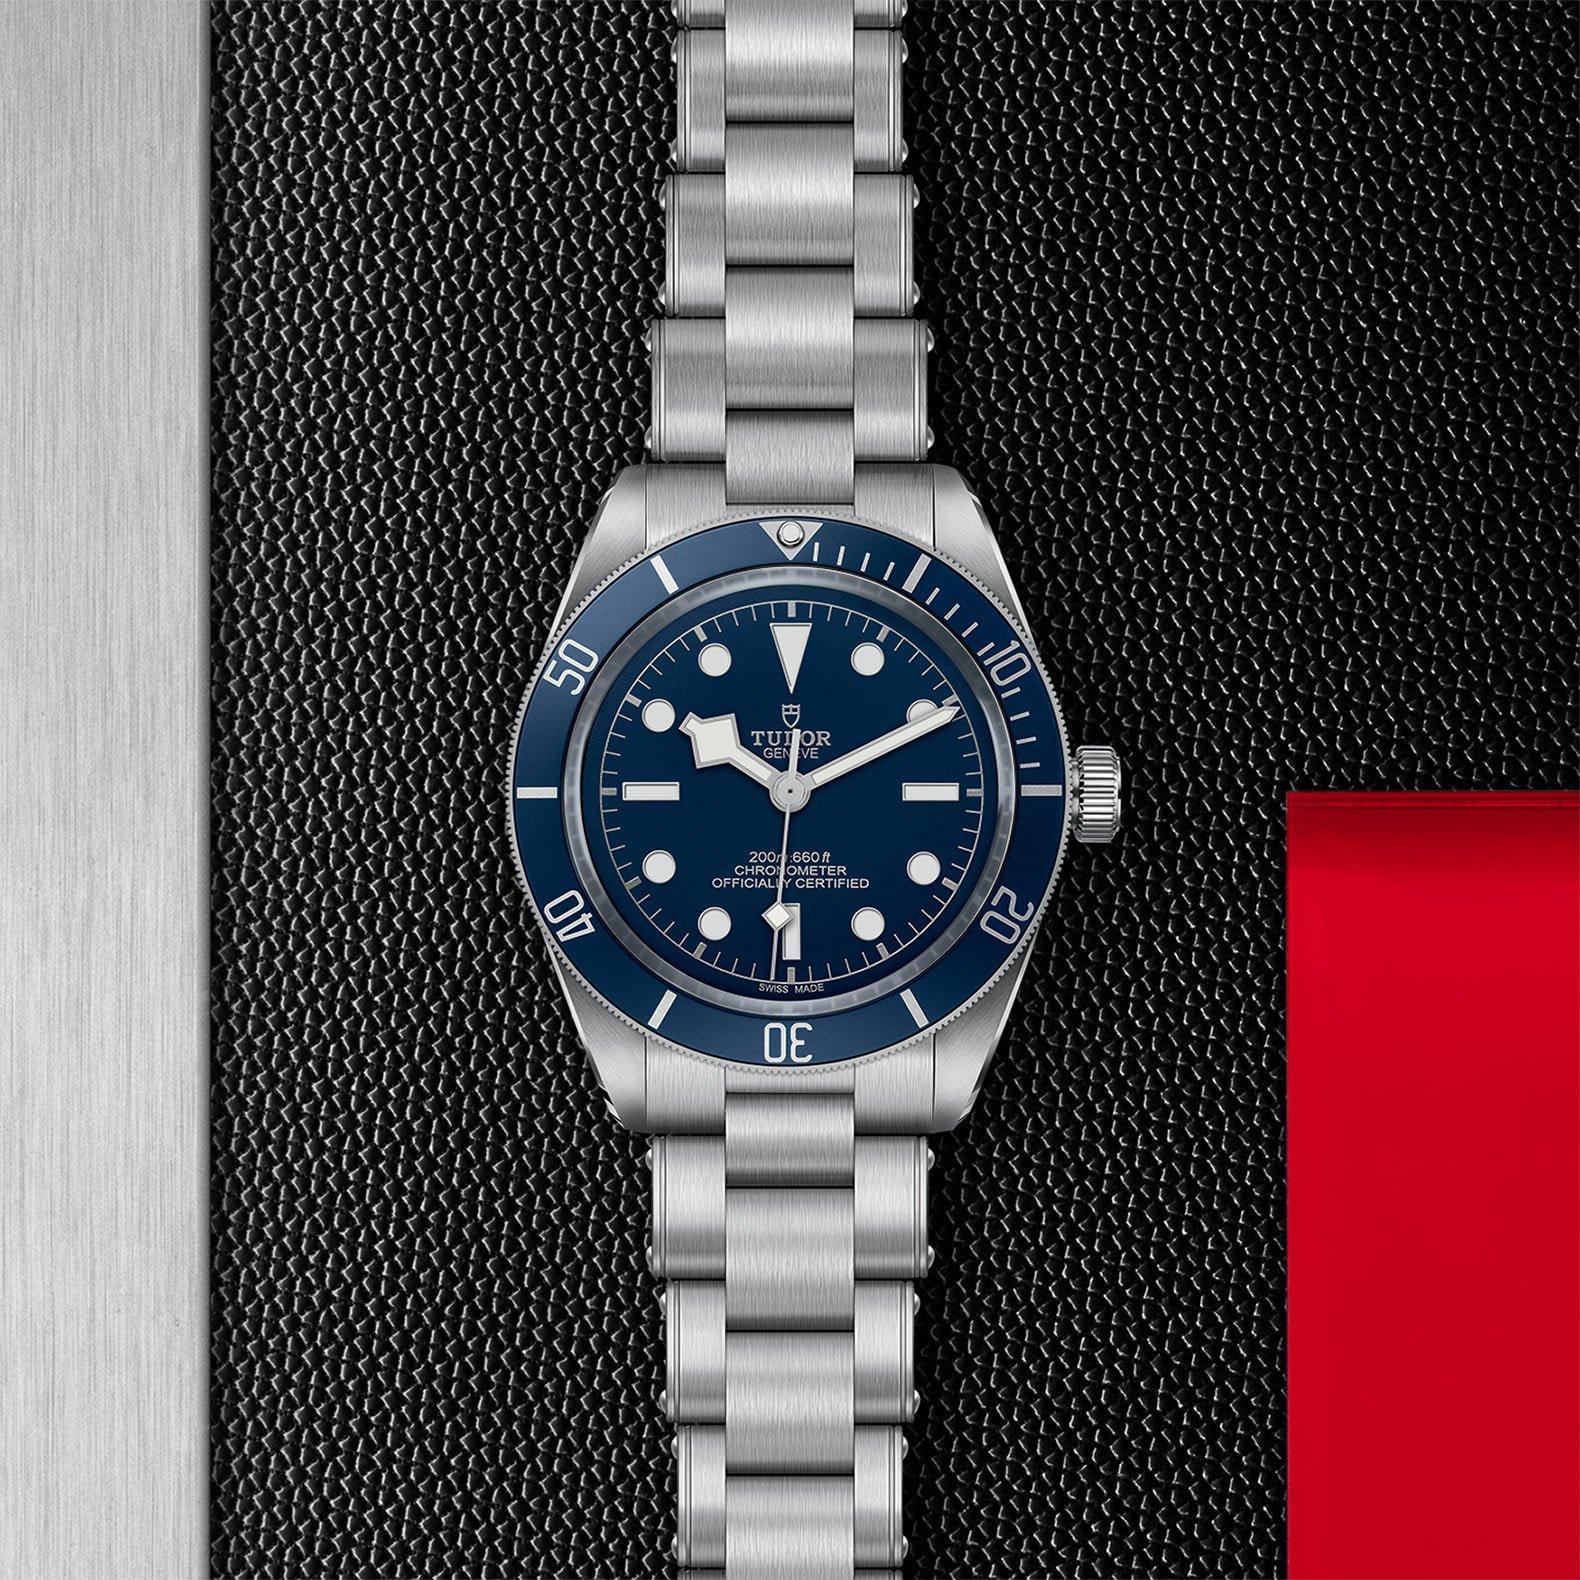 Tudor Black Bay Fifty-Eight Navy Blue Automatic Men's Watch